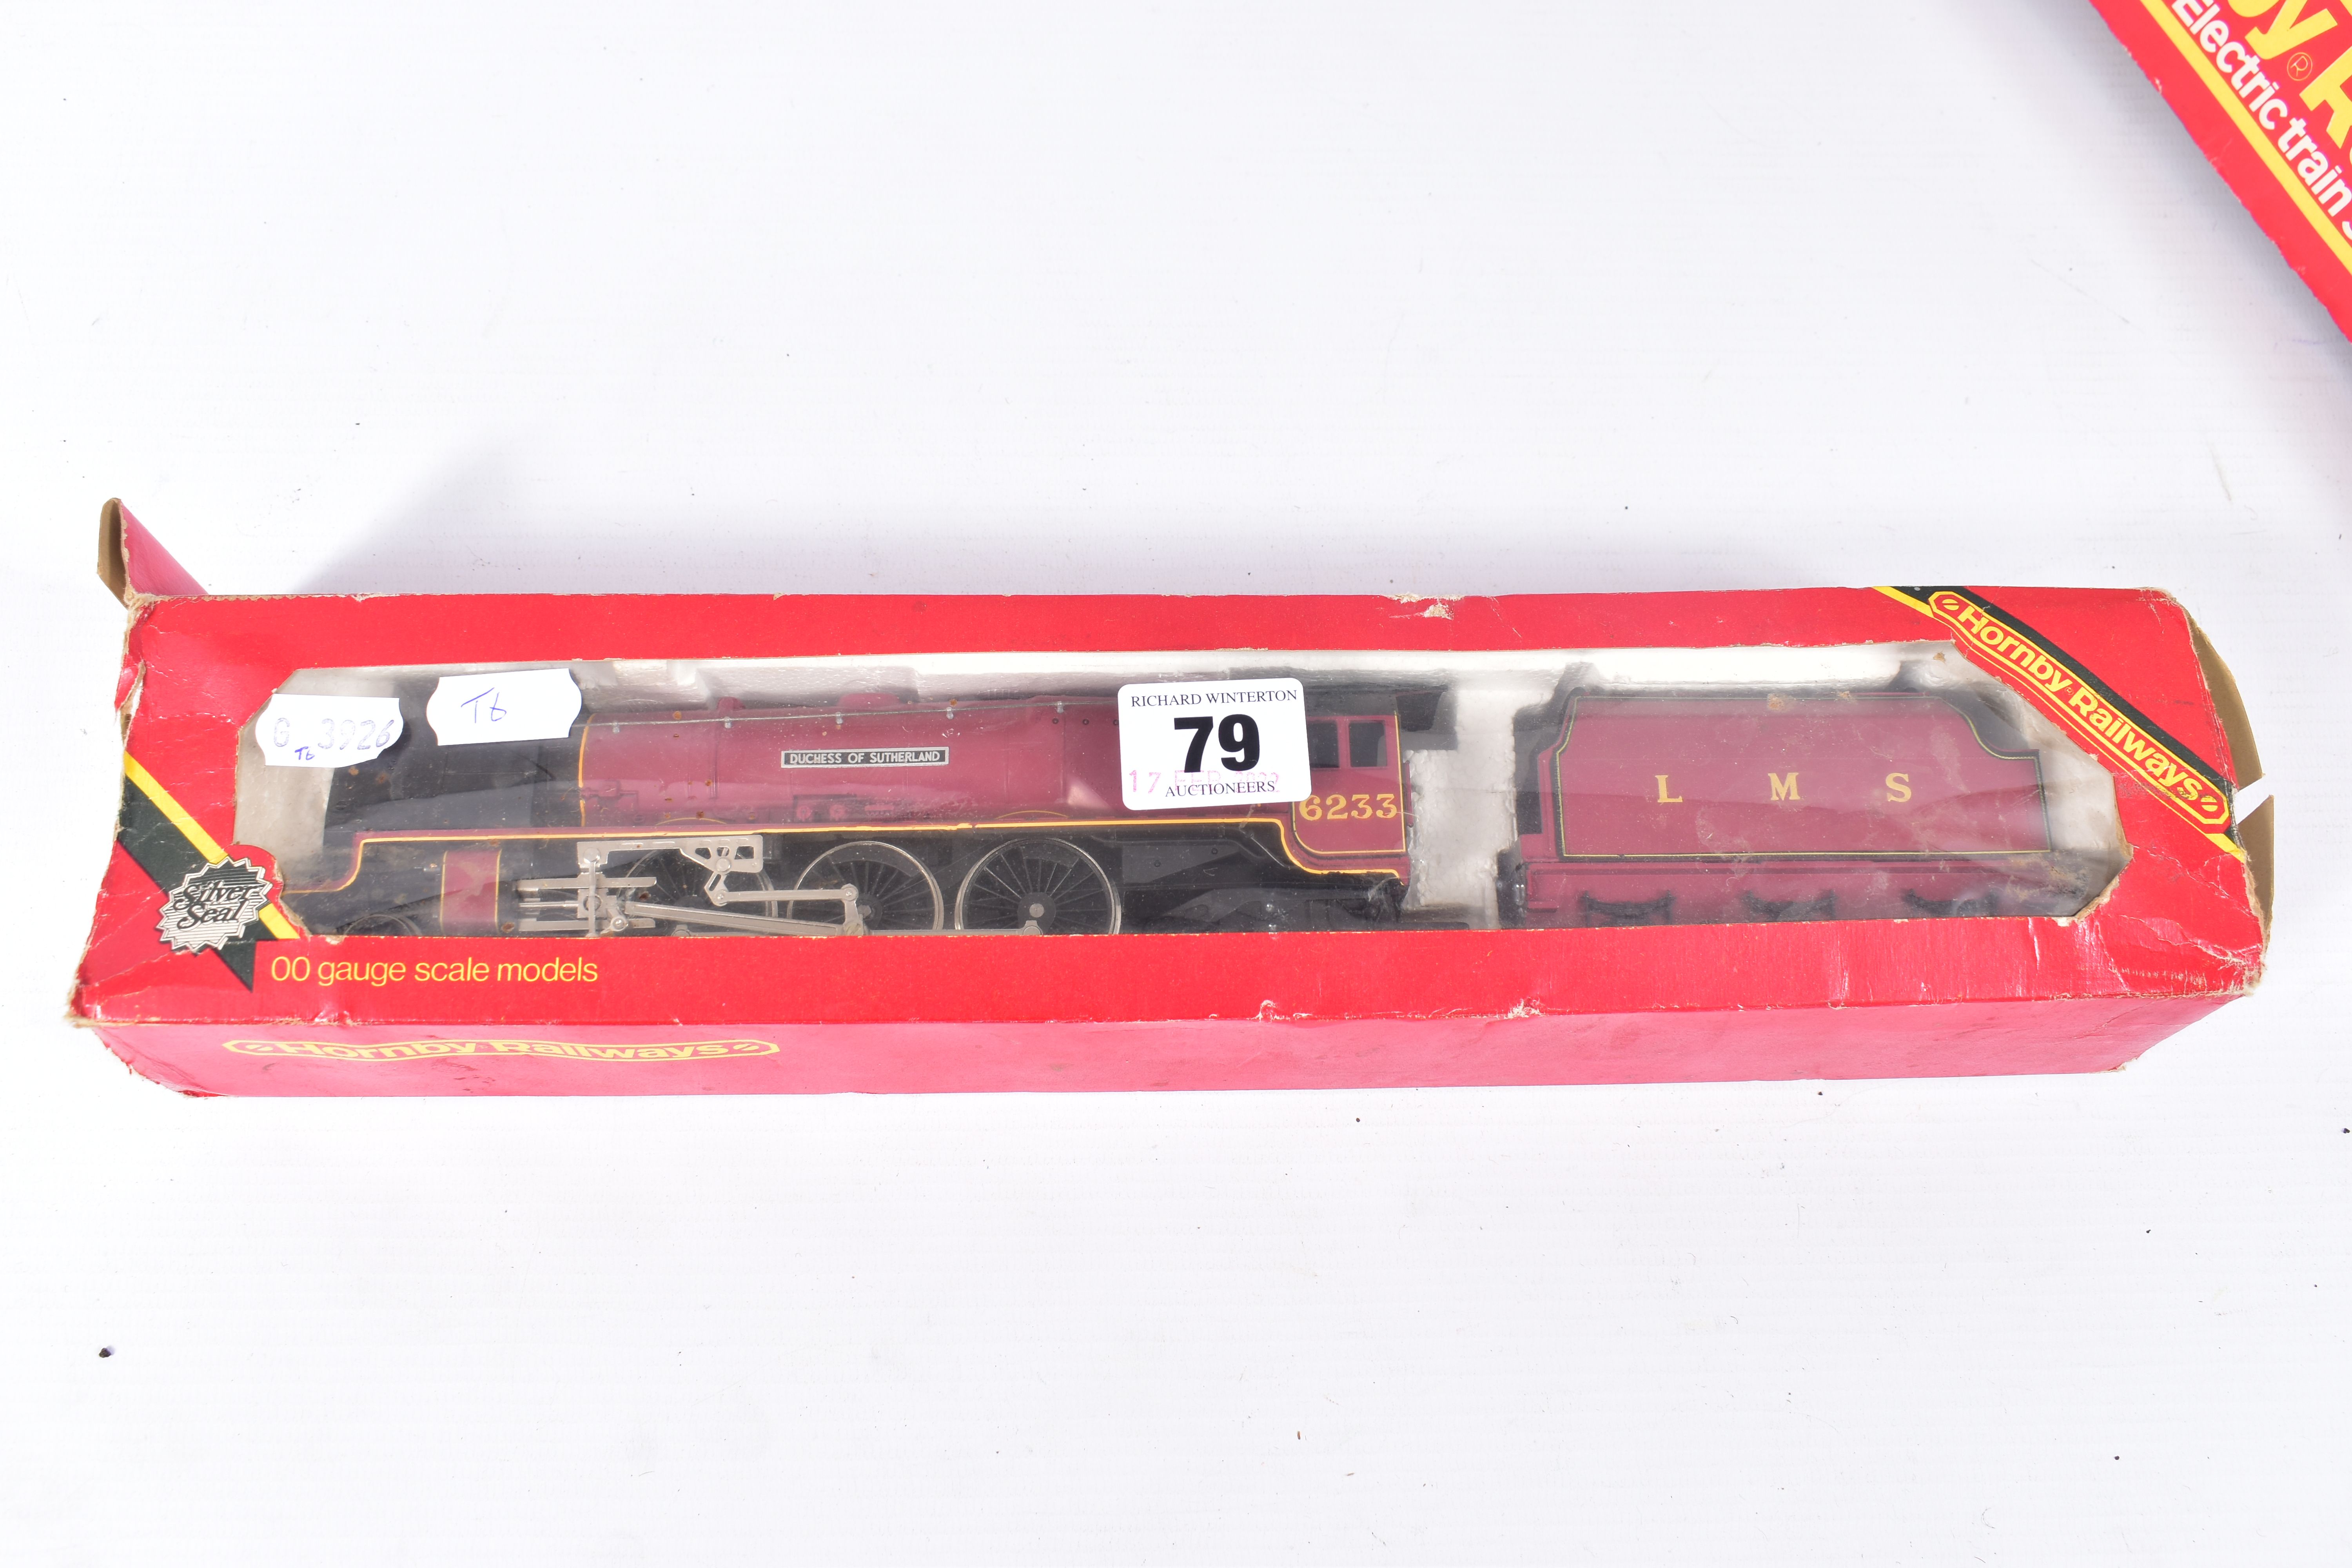 A BOXED HORNBY RAILWAYS OO GAUGE RURAL RAMBLER TRAIN SET, No.R174, comprising freelance industrial - Image 3 of 7